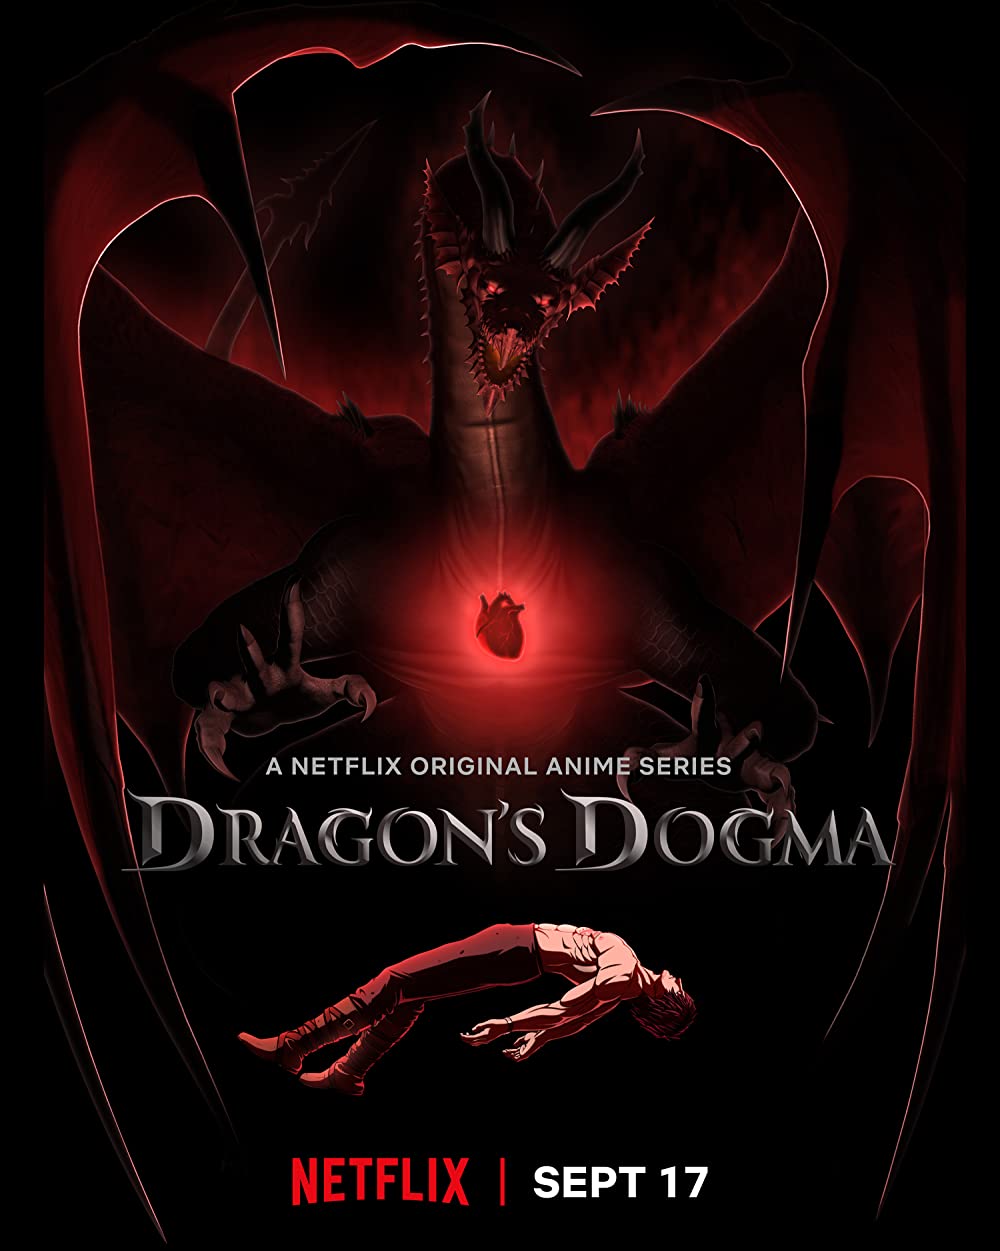 Filmbeschreibung zu Dragon's Dogma